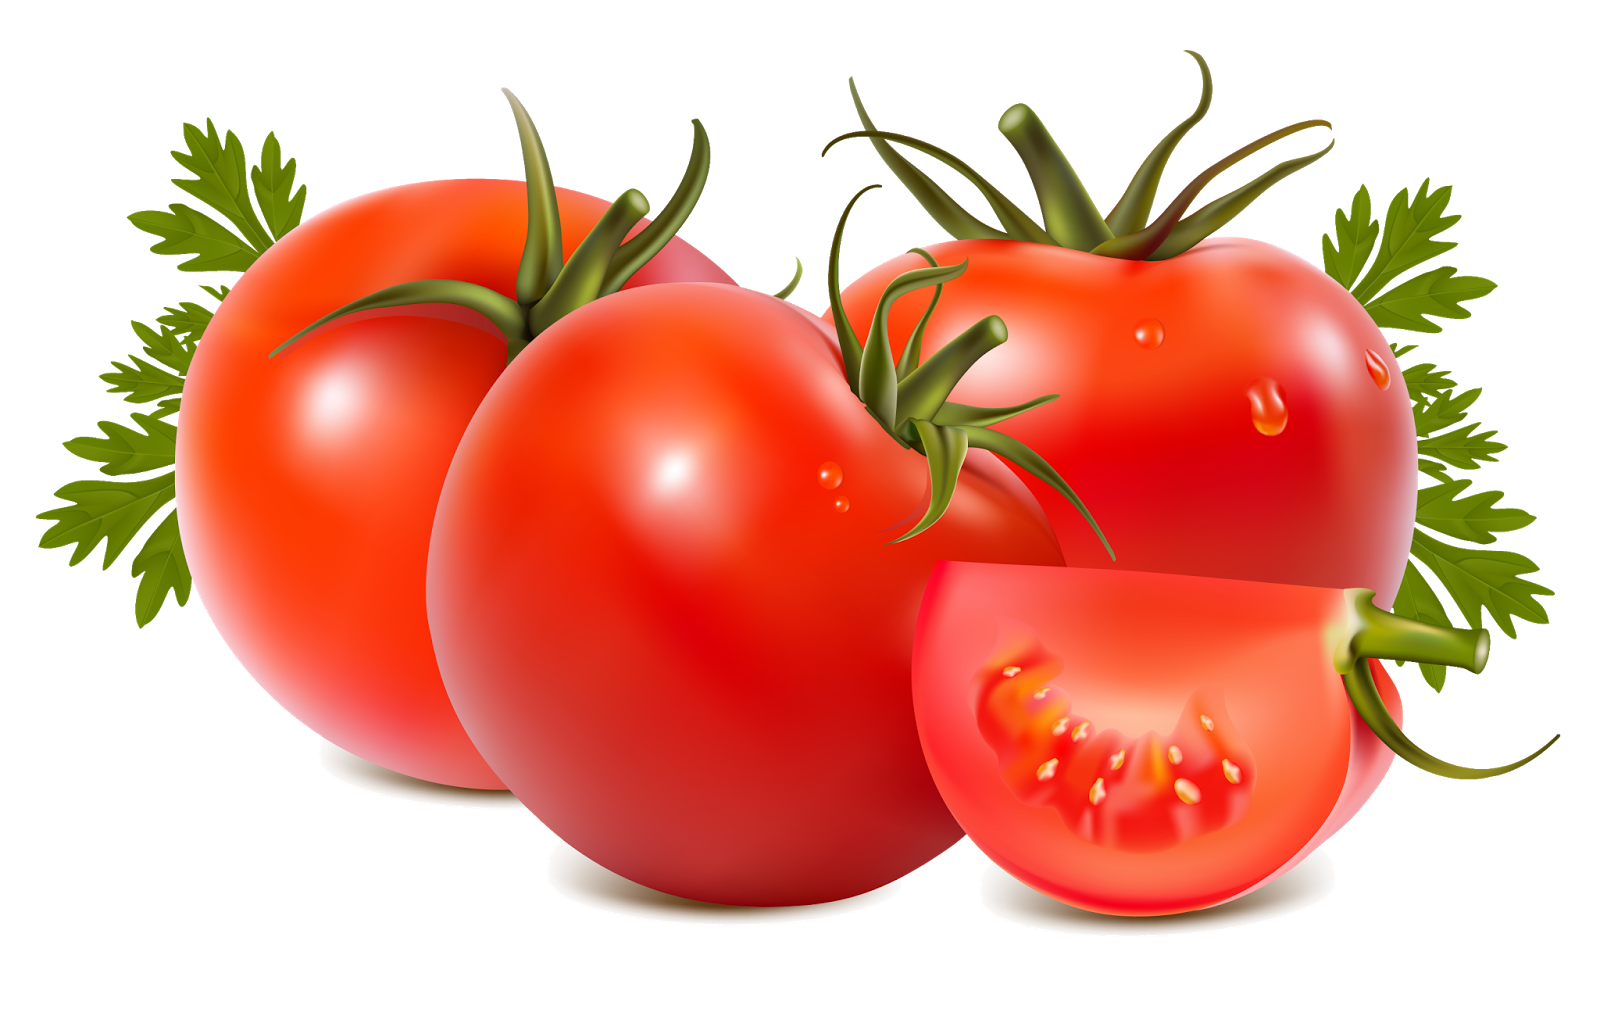 tomato and kidney stone everyday life #15559